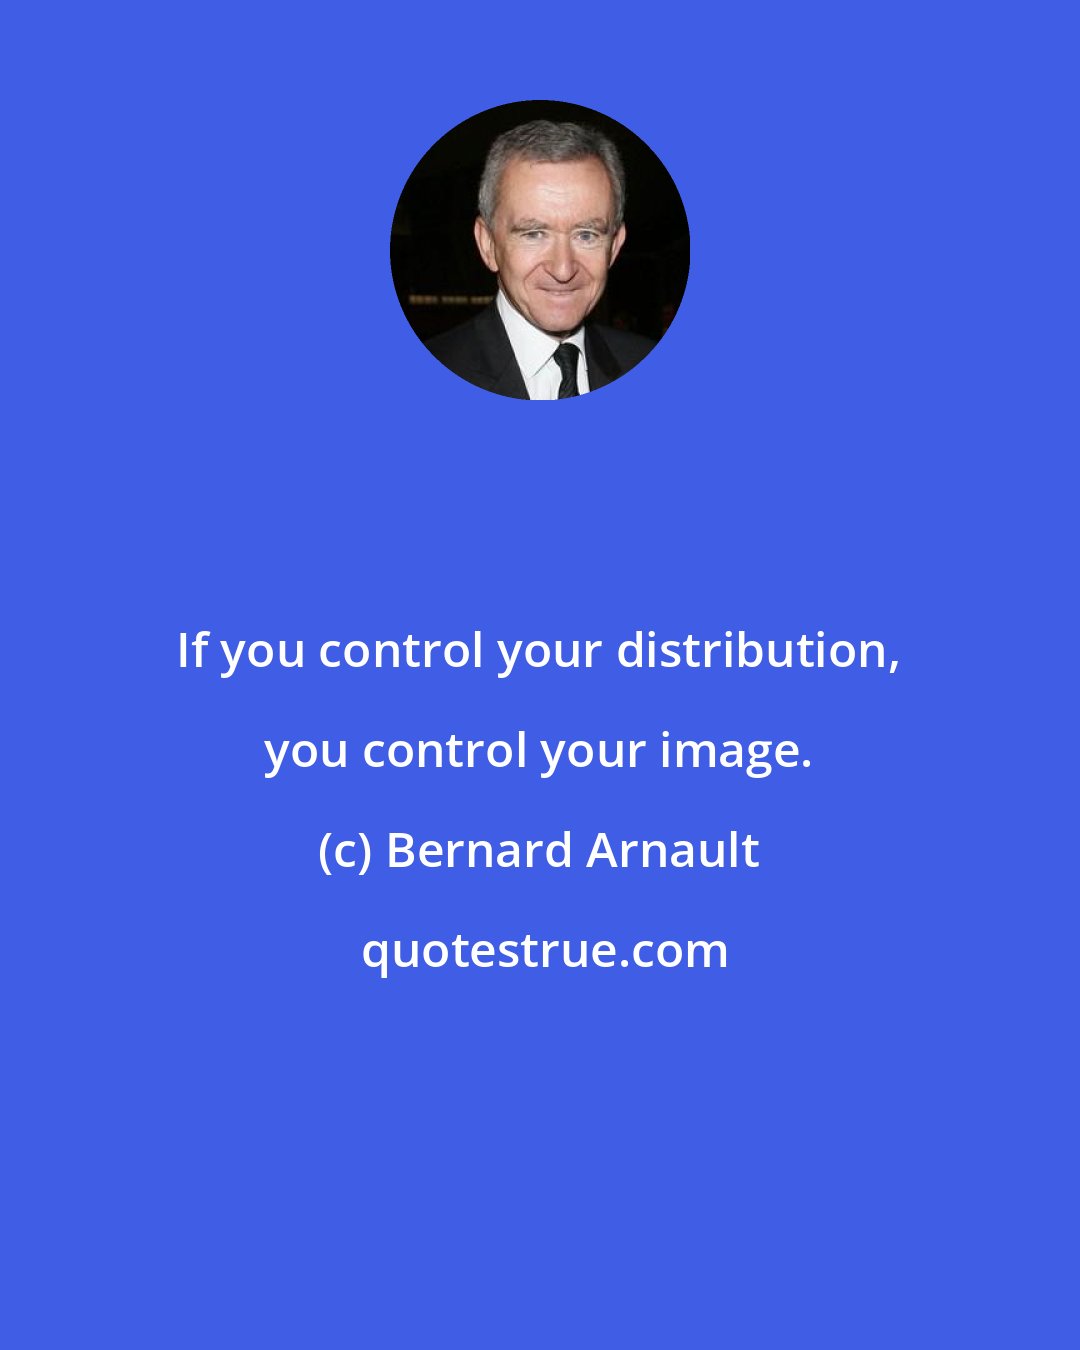 Bernard Arnault: If you control your distribution, you control your image.